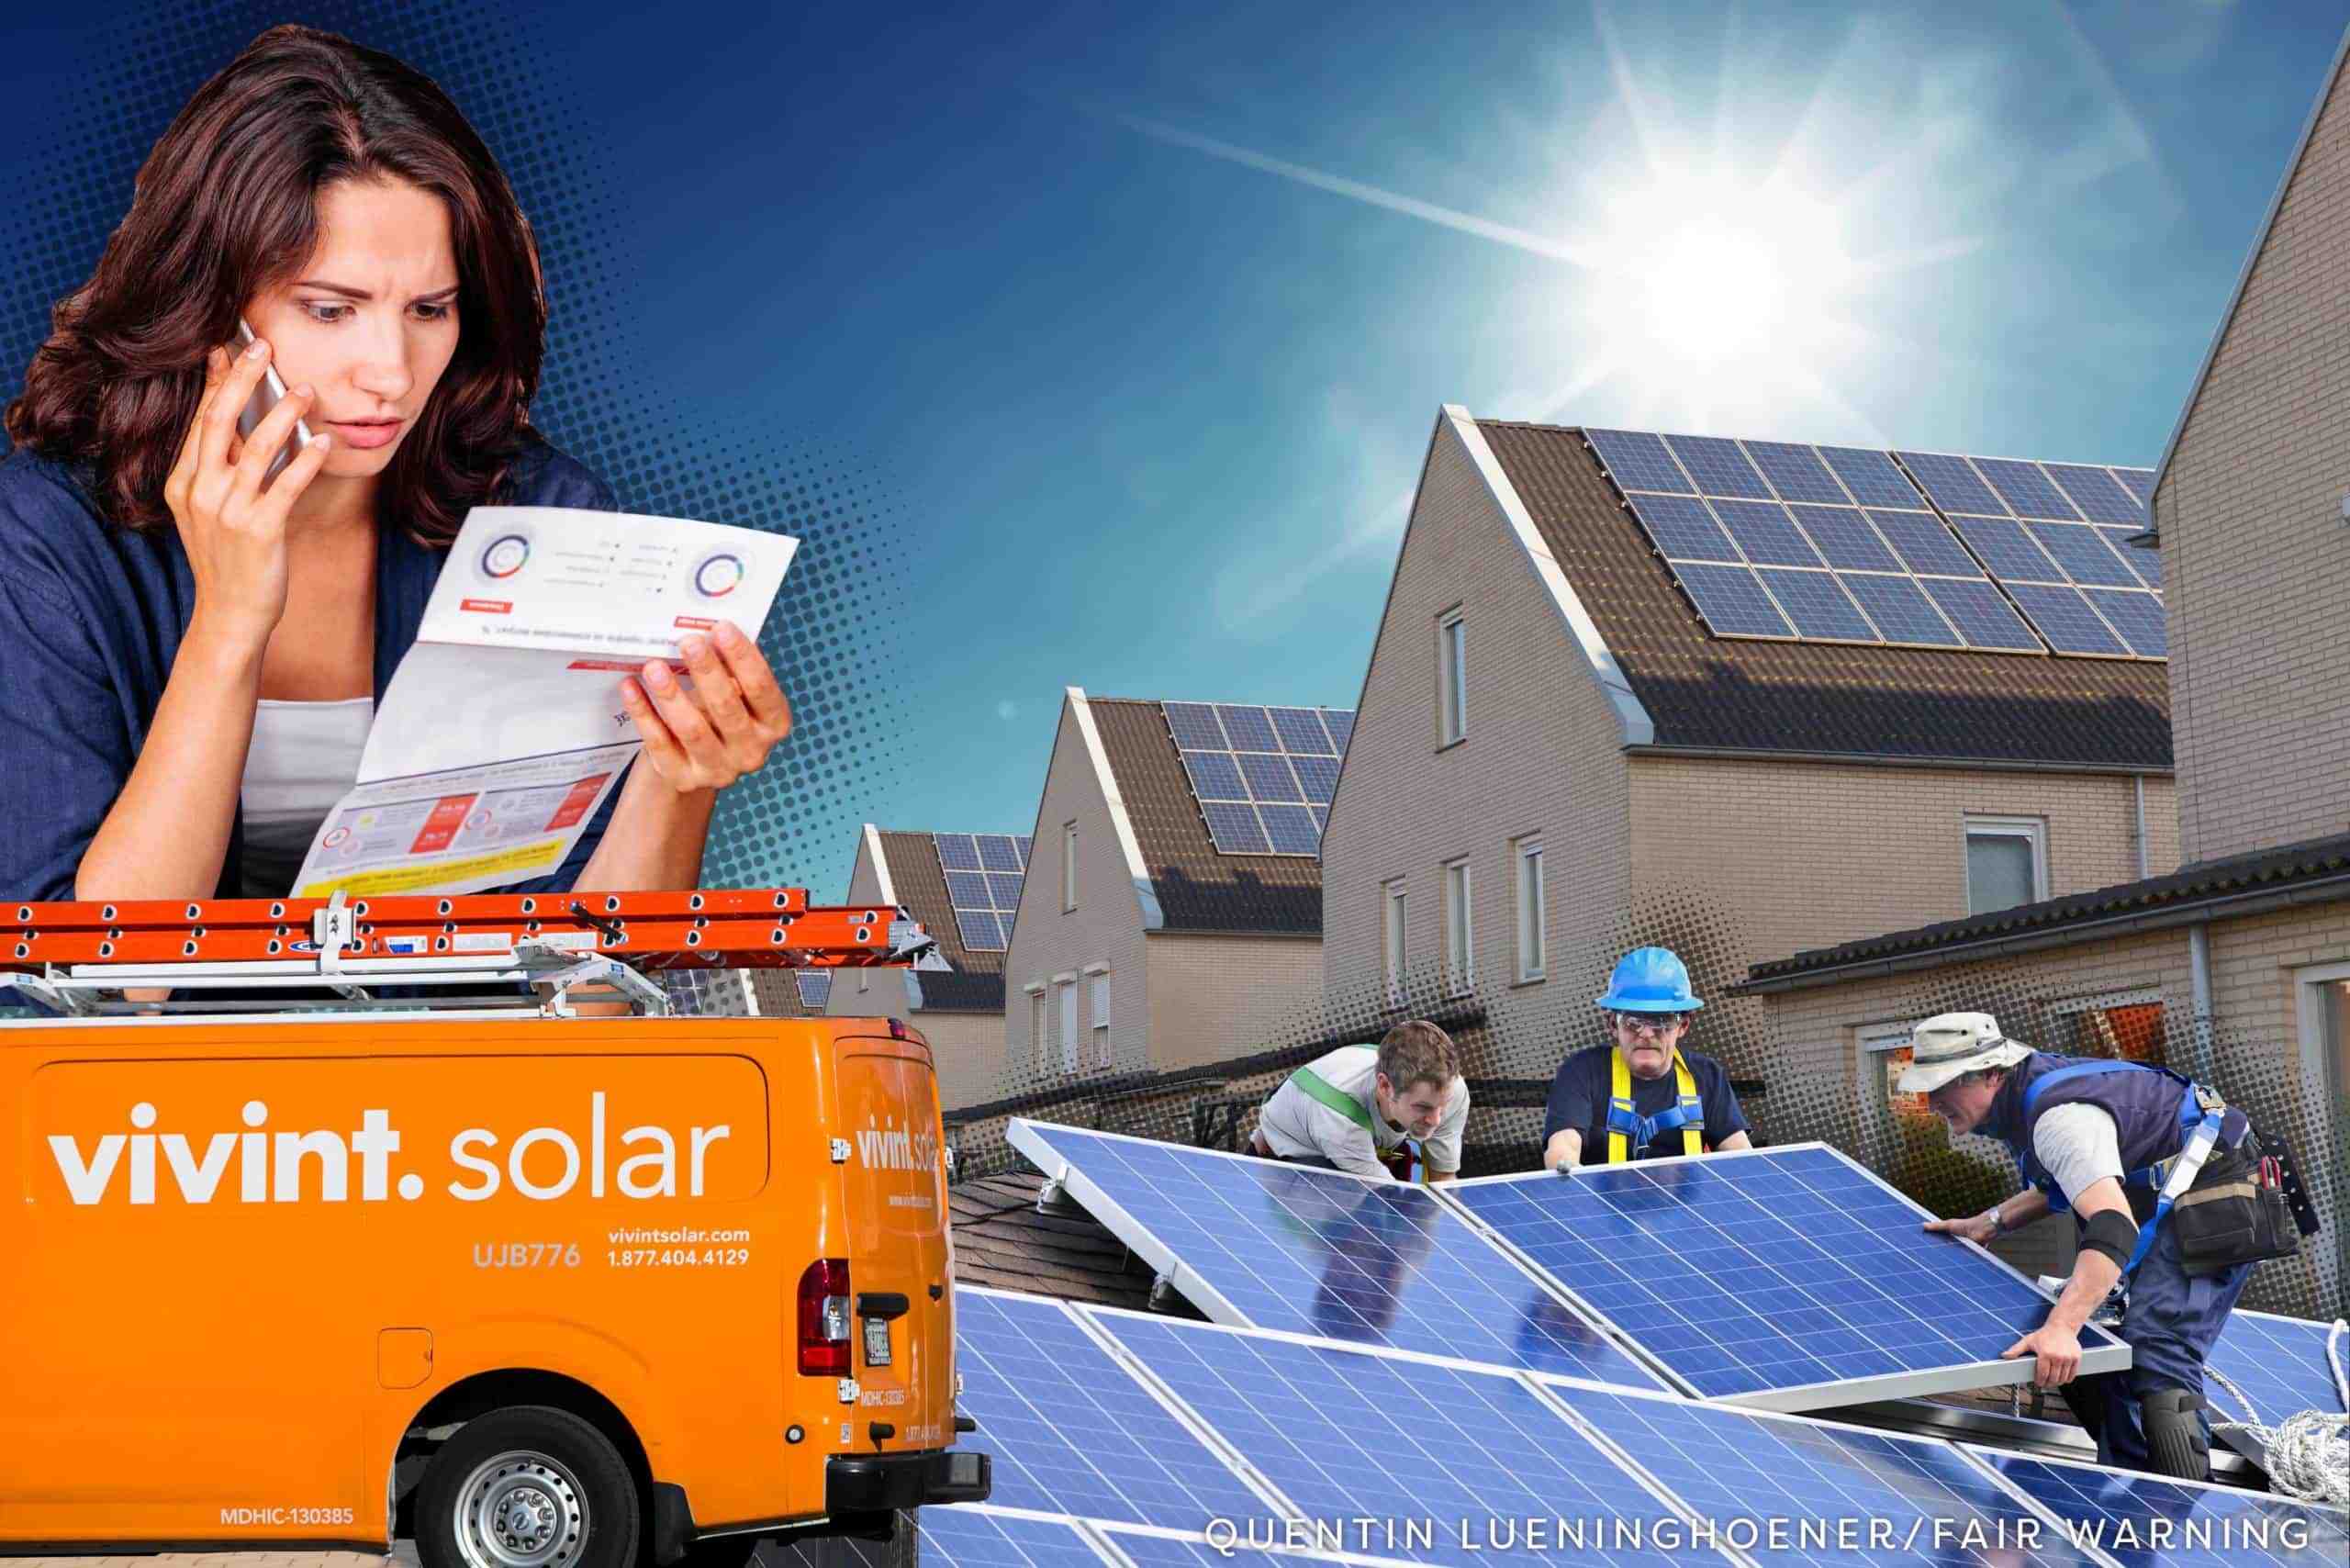 Is Vivint Solar a legitimate company?